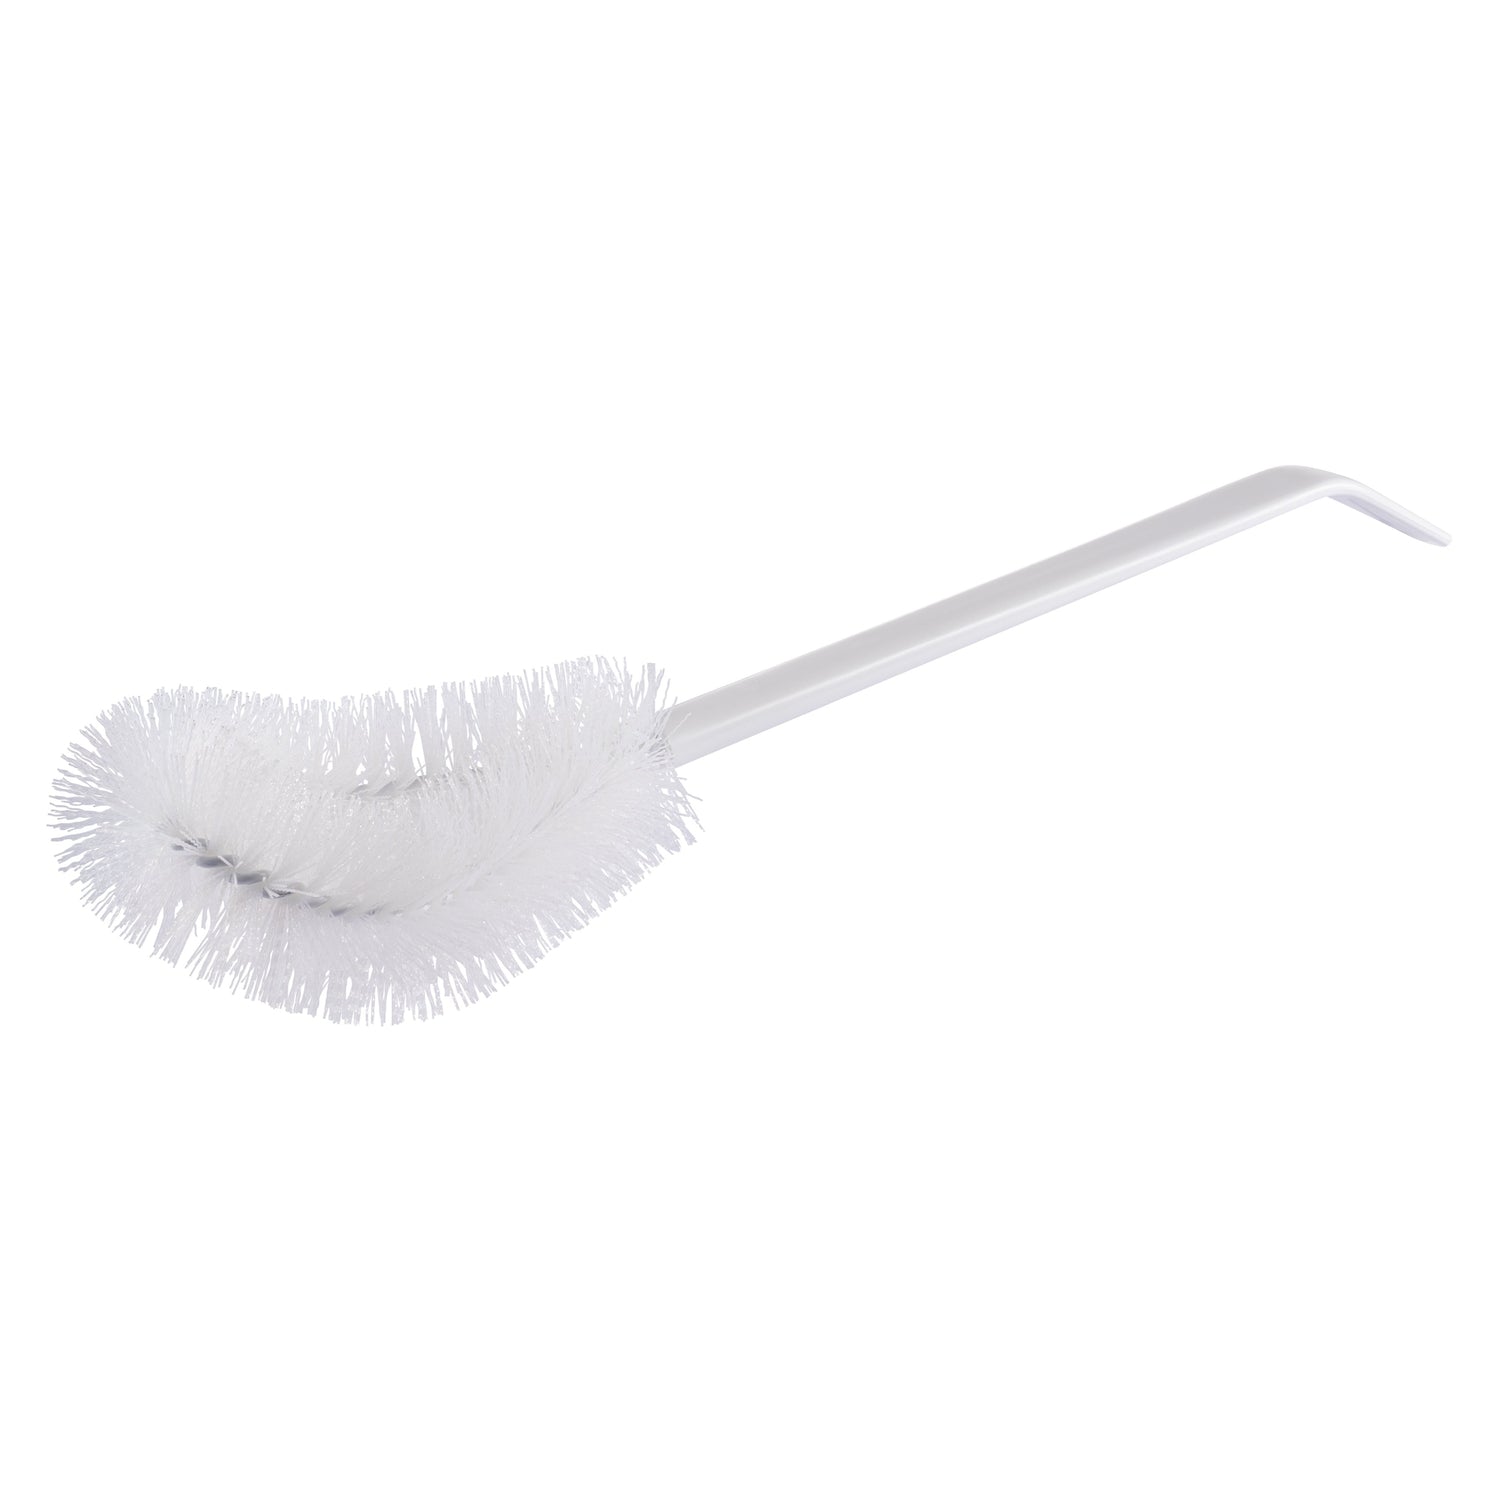 Flexible White 30 Tube Brush Cleaning Handle